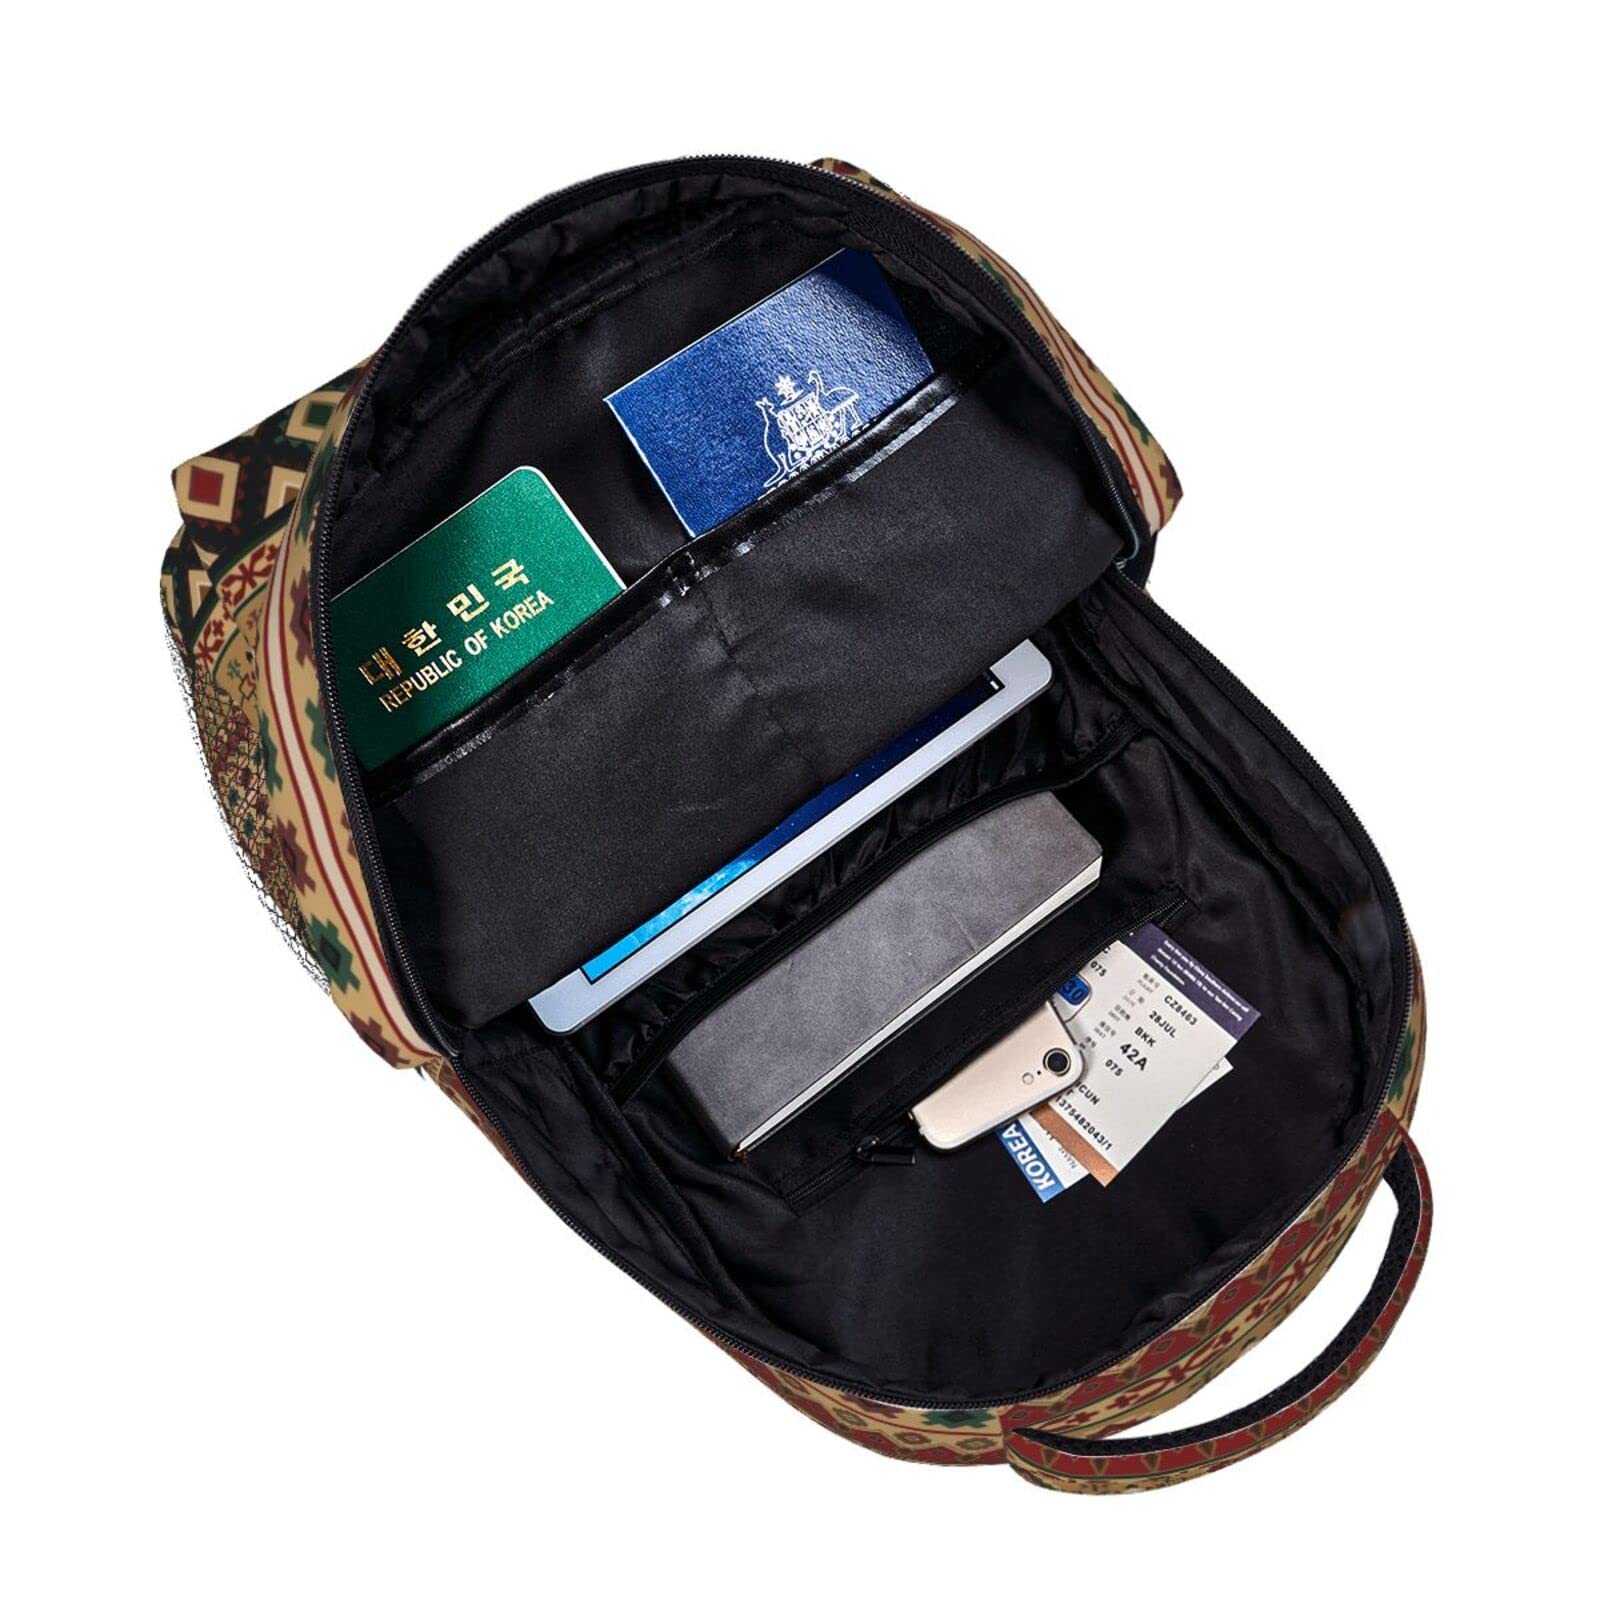 Juoritu Western Aztec Geometry Backpacks, Laptop Backpacks for Travel Work Gifts, Lightweight Bookbags for Men and Women